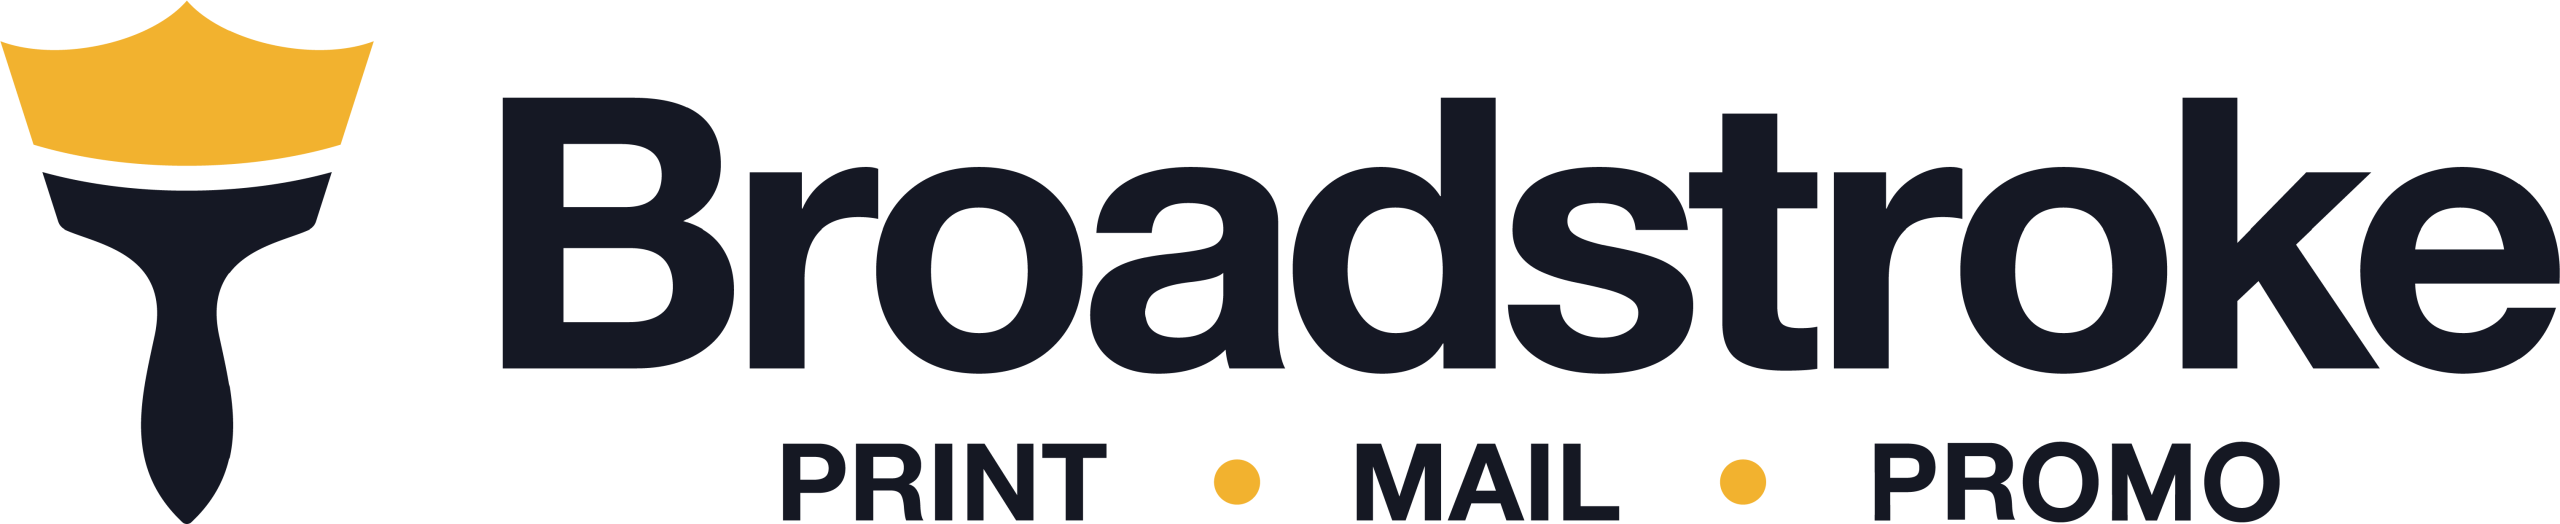 Broadstroke Inc Header logo